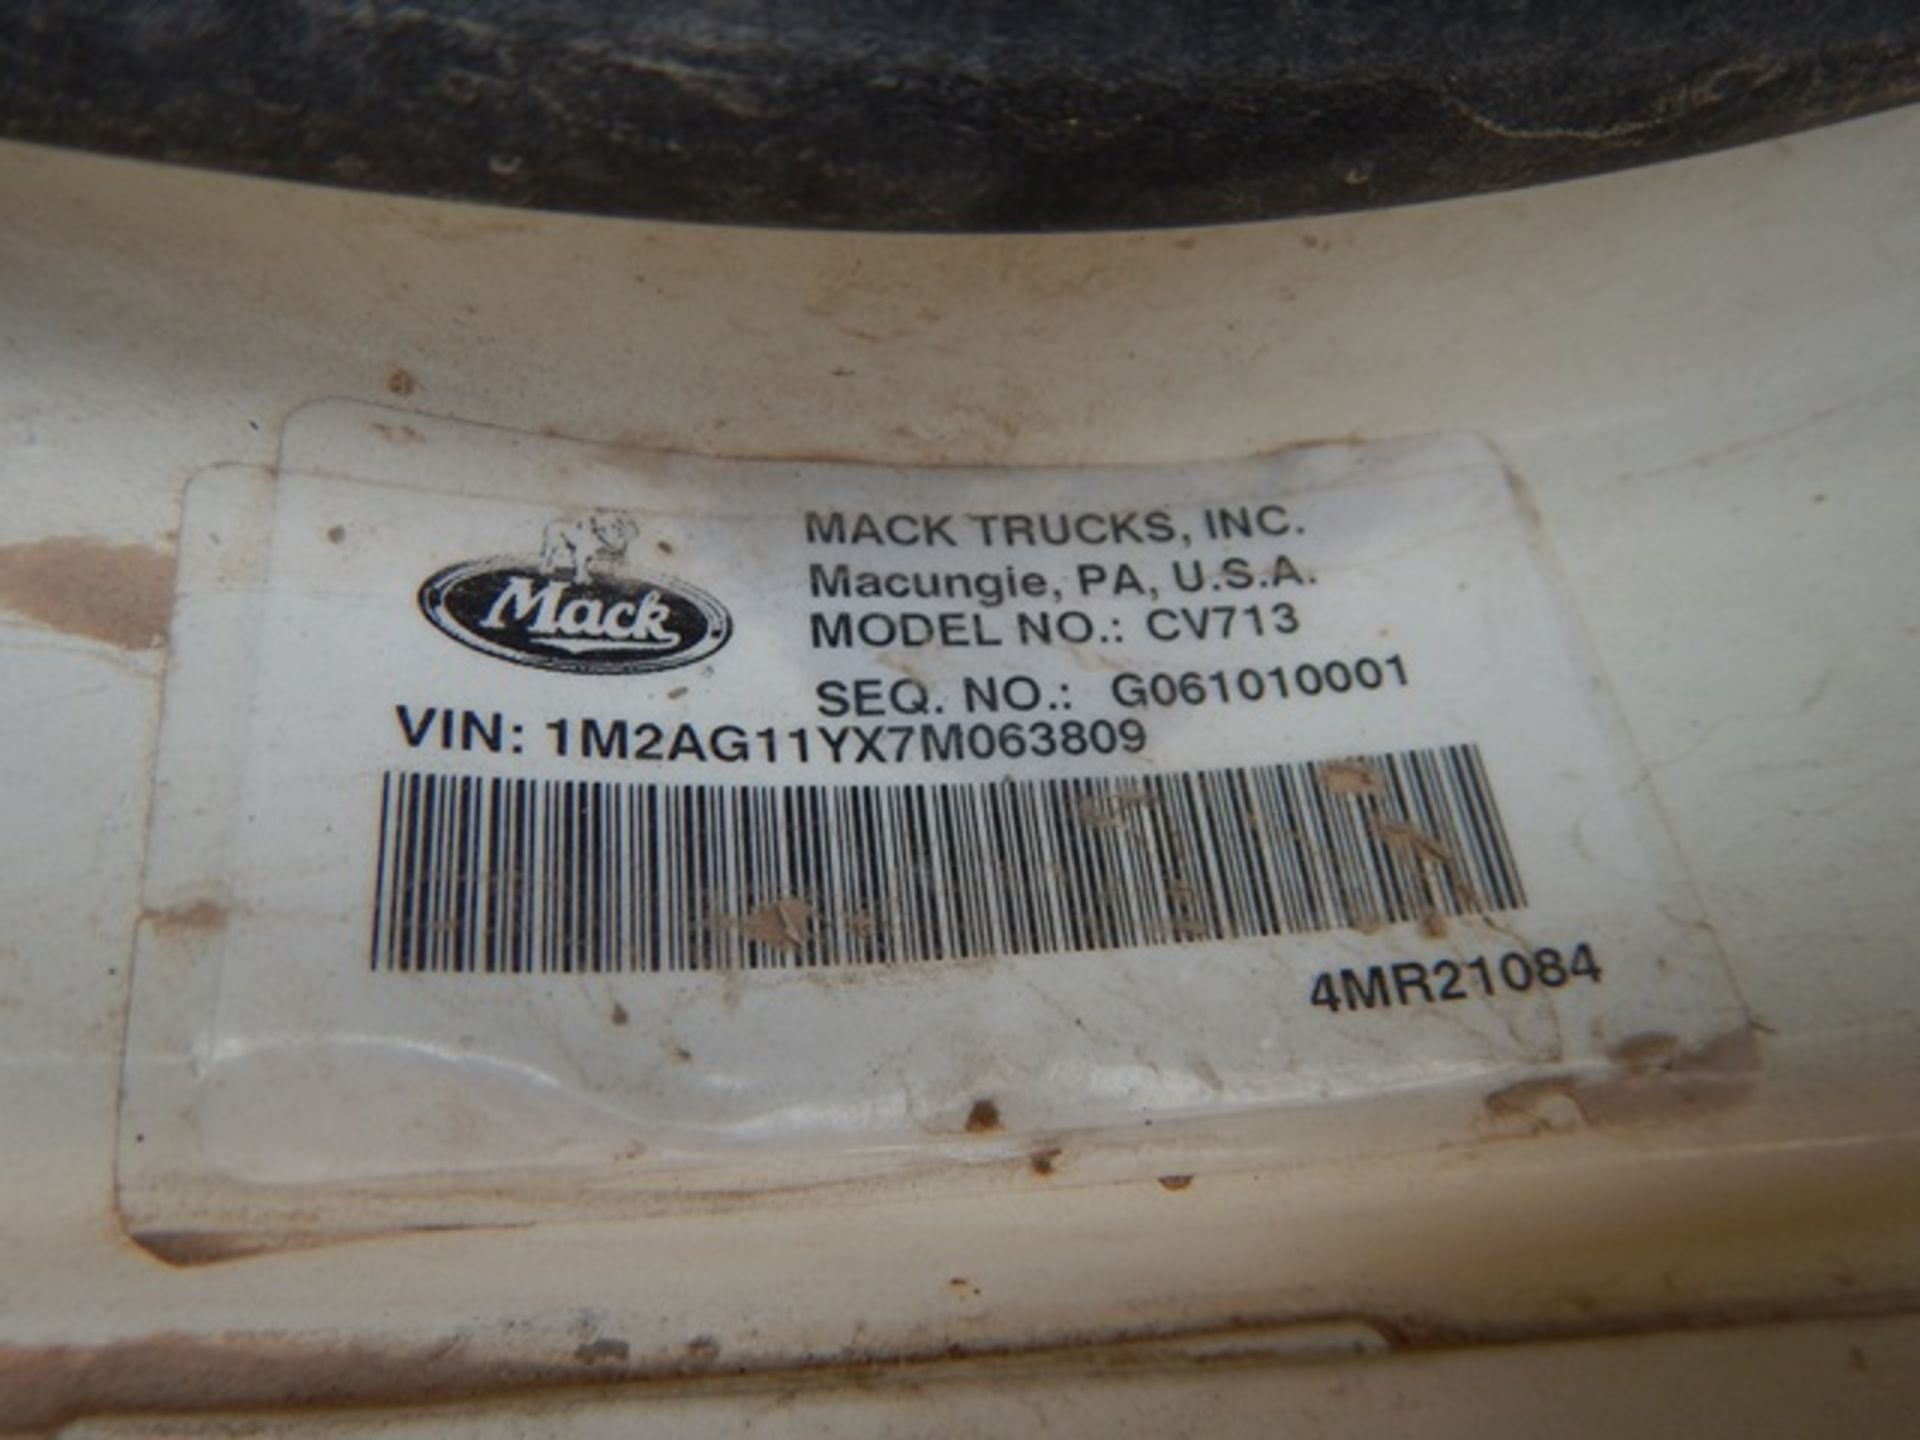 2007 MACK CV713 TRUCK TRACTOR - Image 45 of 46